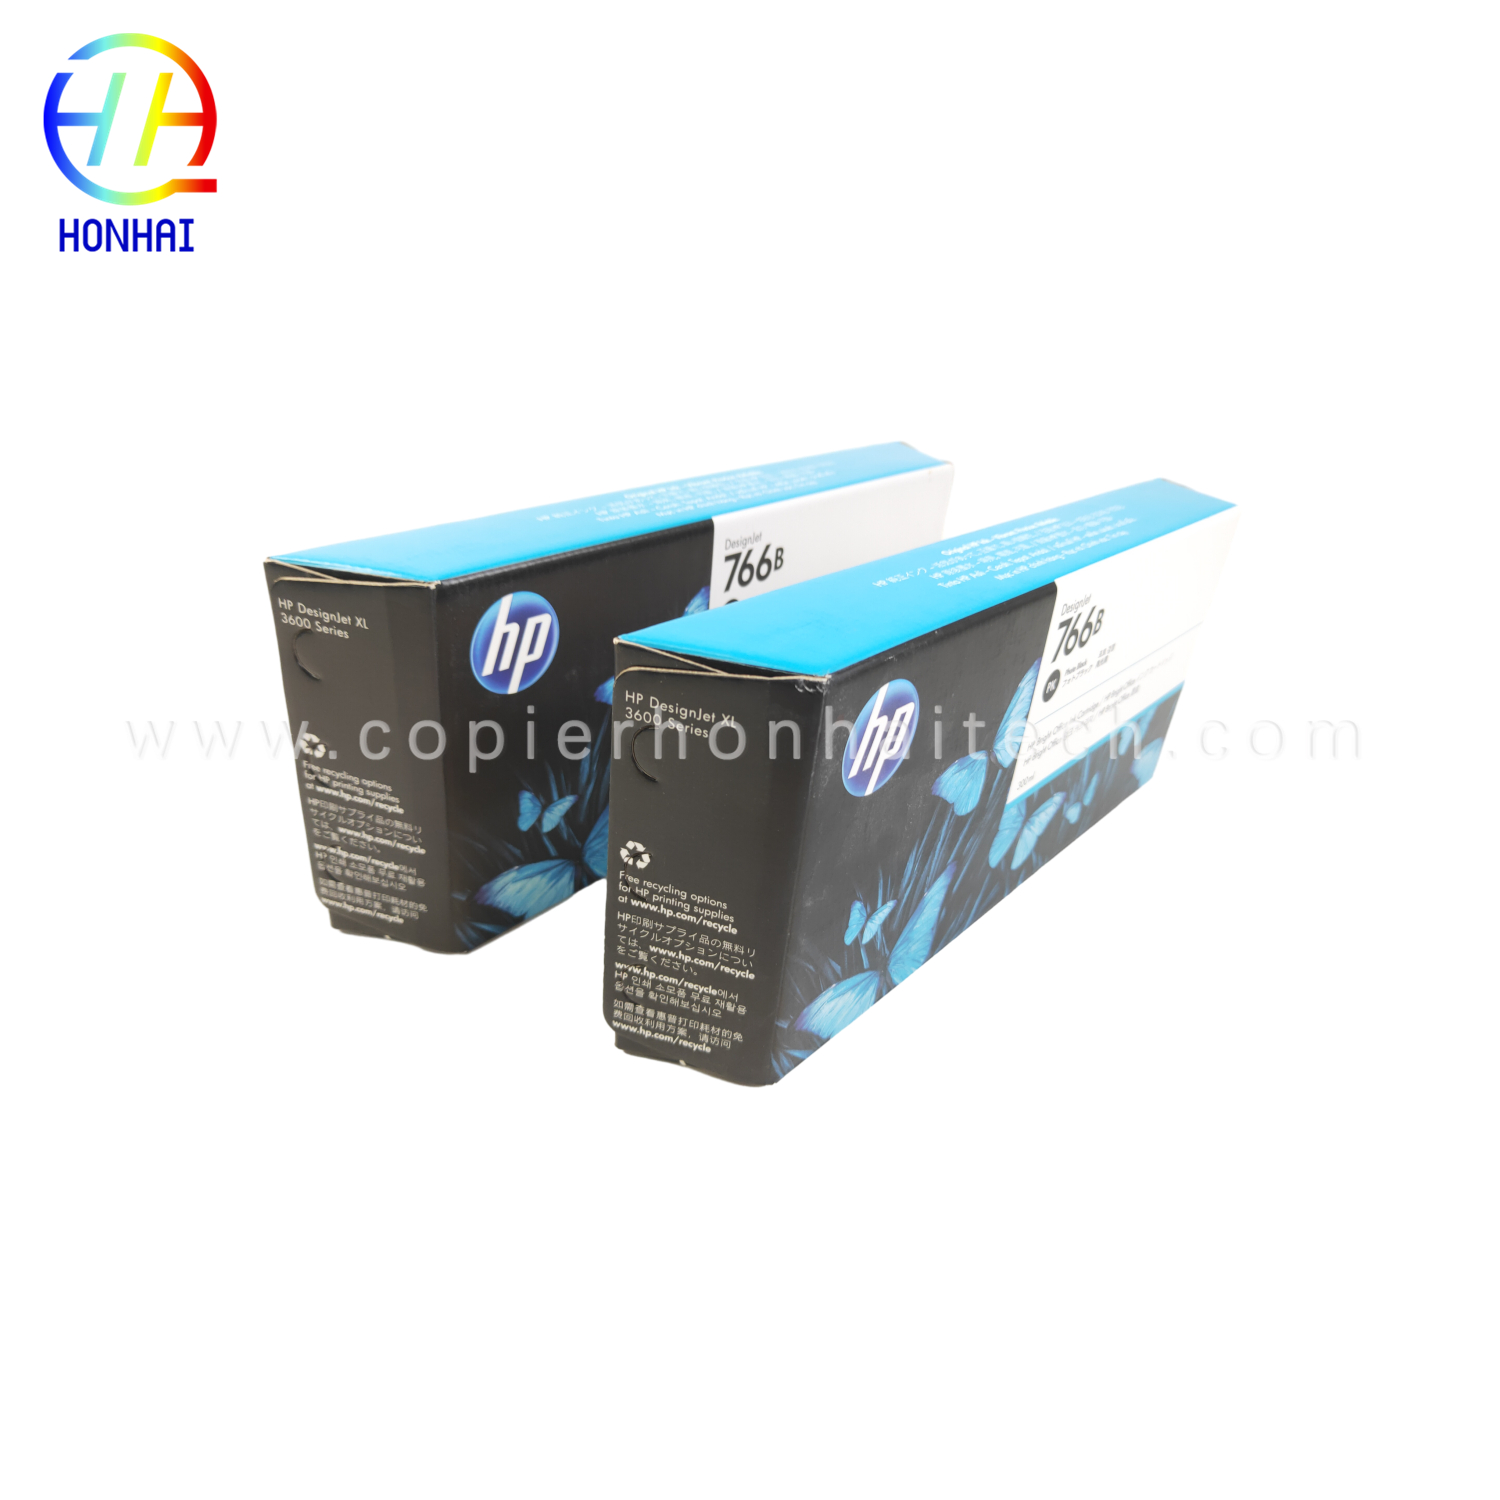 https://www.copierhonhaitech.com/cartucho de tinta original-para-hp-designjet-xl-3600-766-300-ml-matte-black-p2v92a-product/